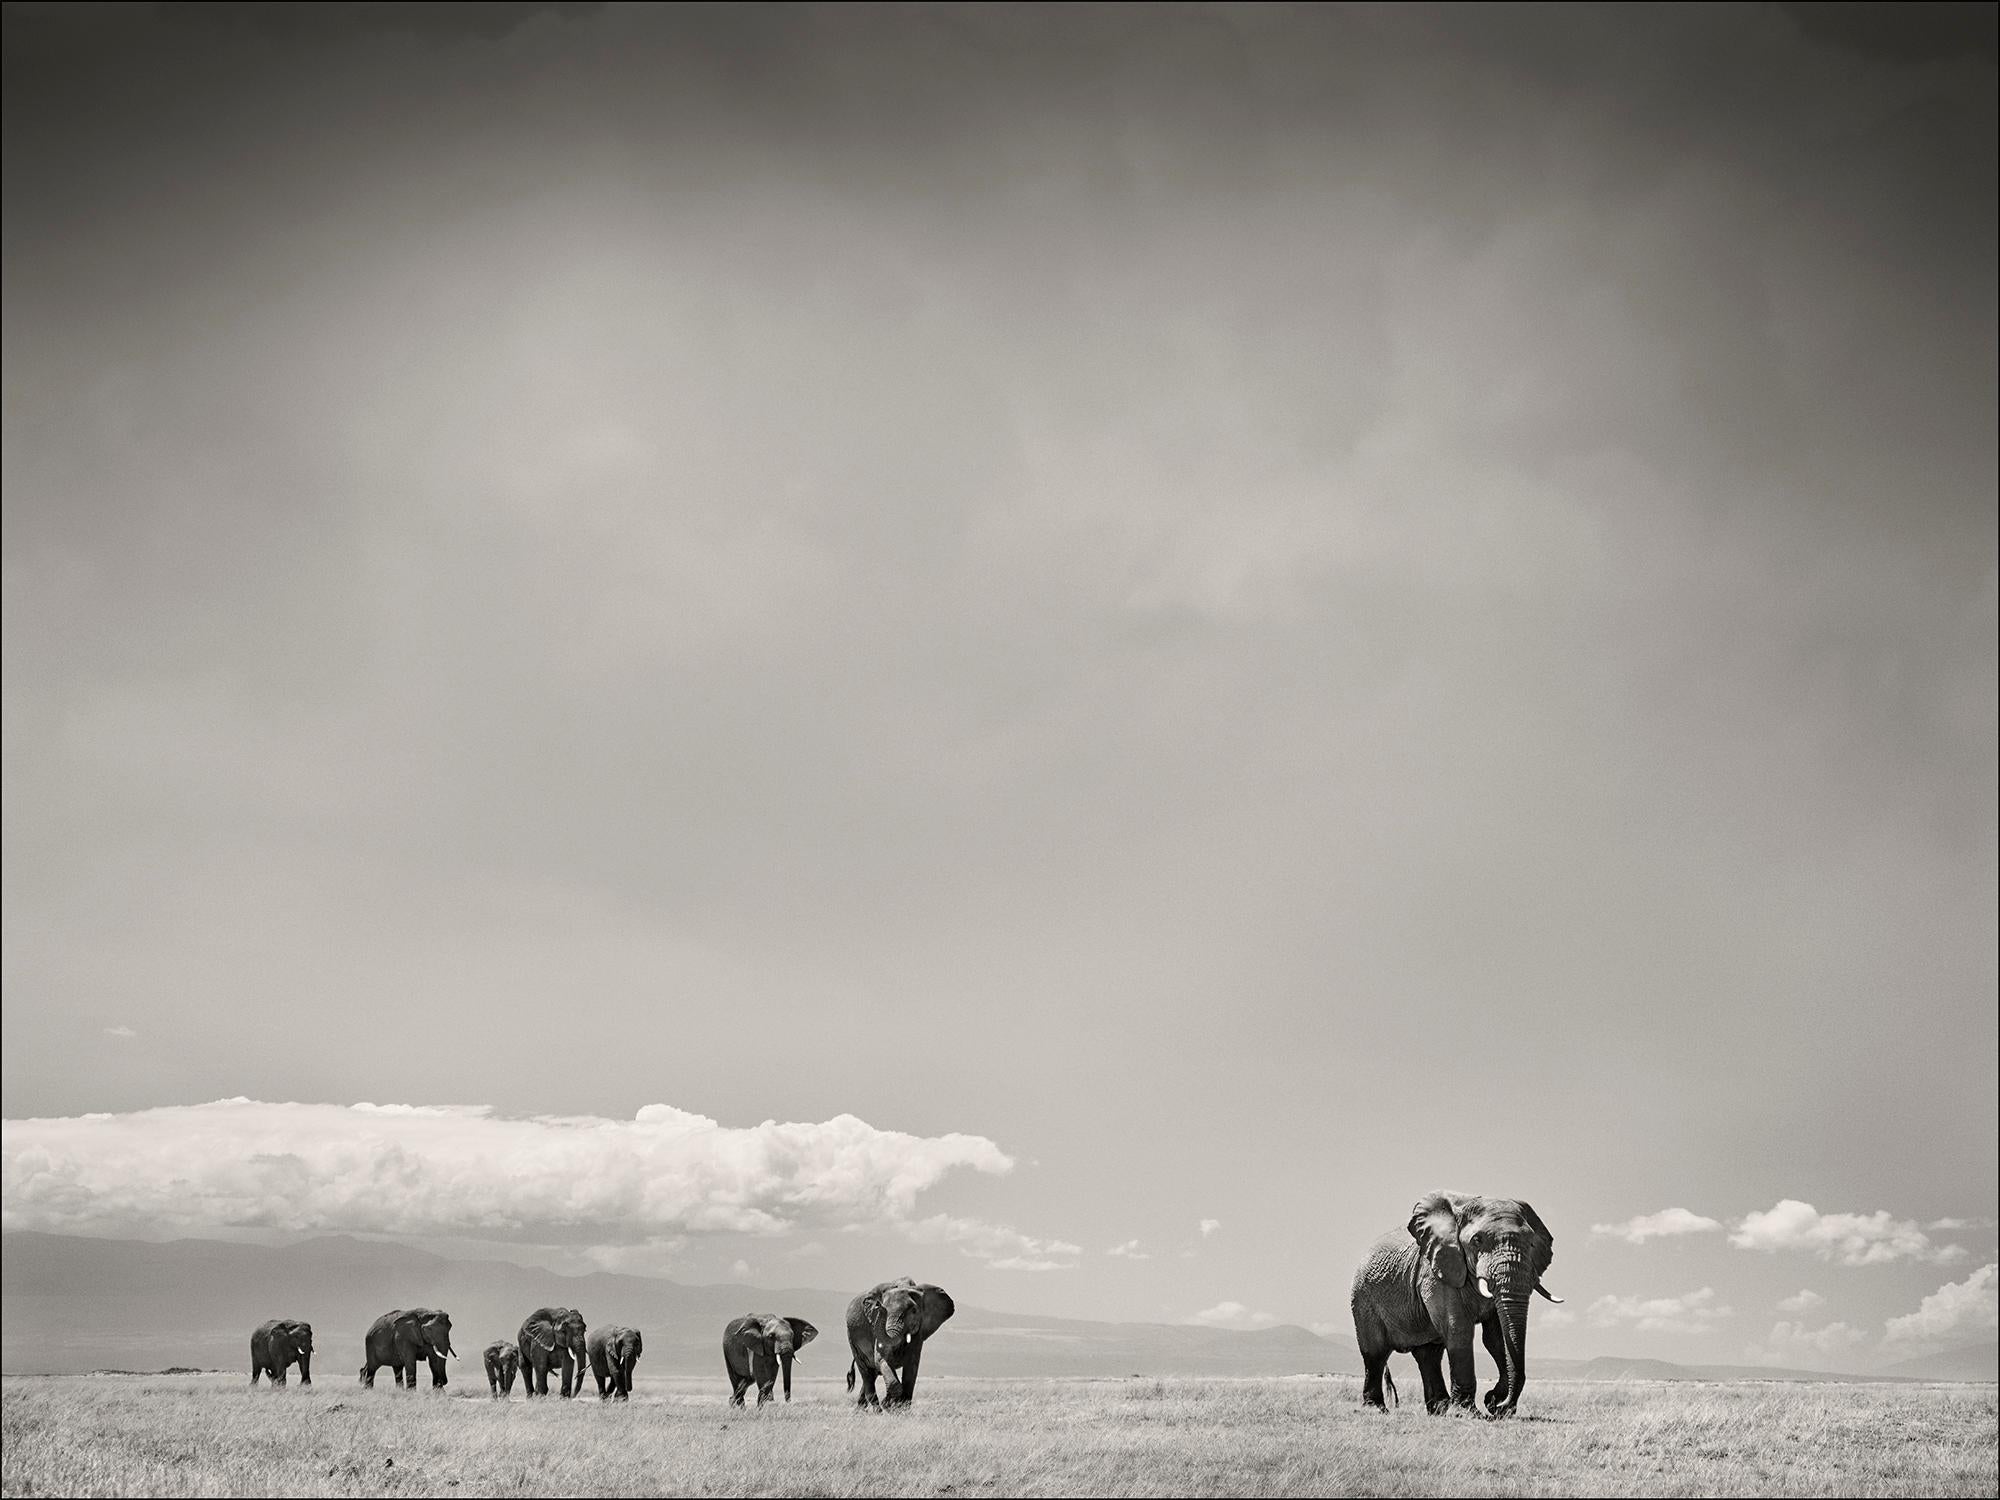 Joachim Schmeisser Landscape Photograph - The Matriarch, Elephant, wildlife